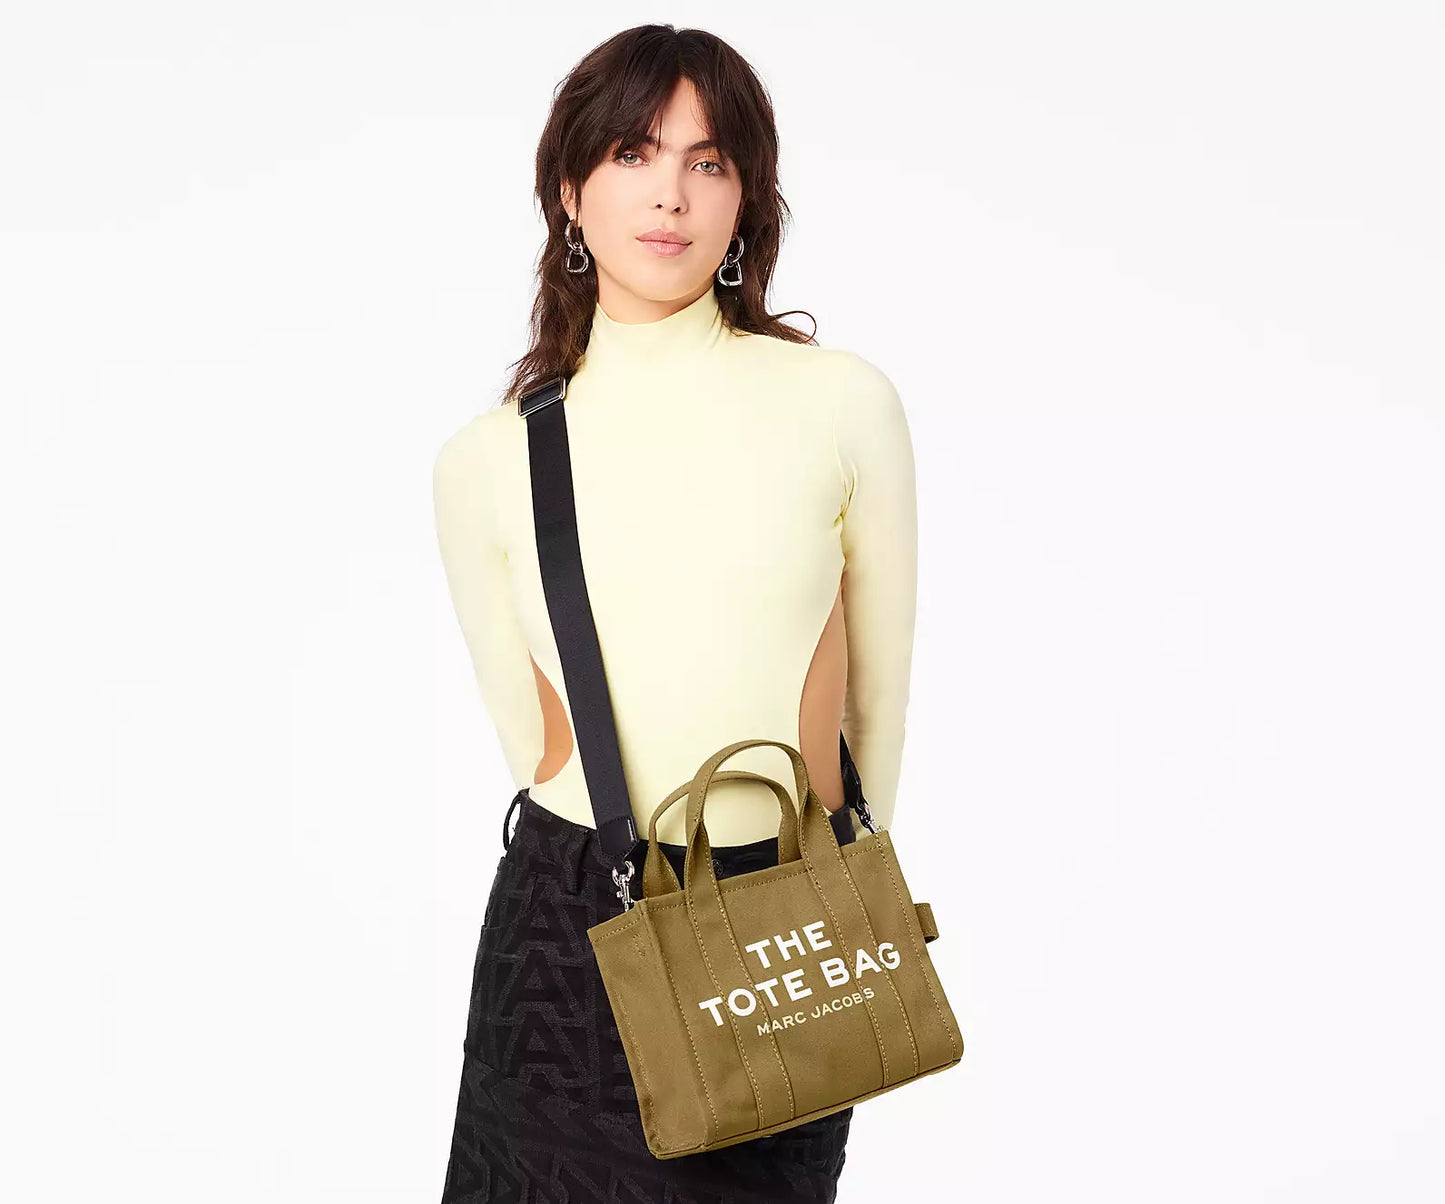 Marc Jacobs The Tote Bag – Popshop Usa